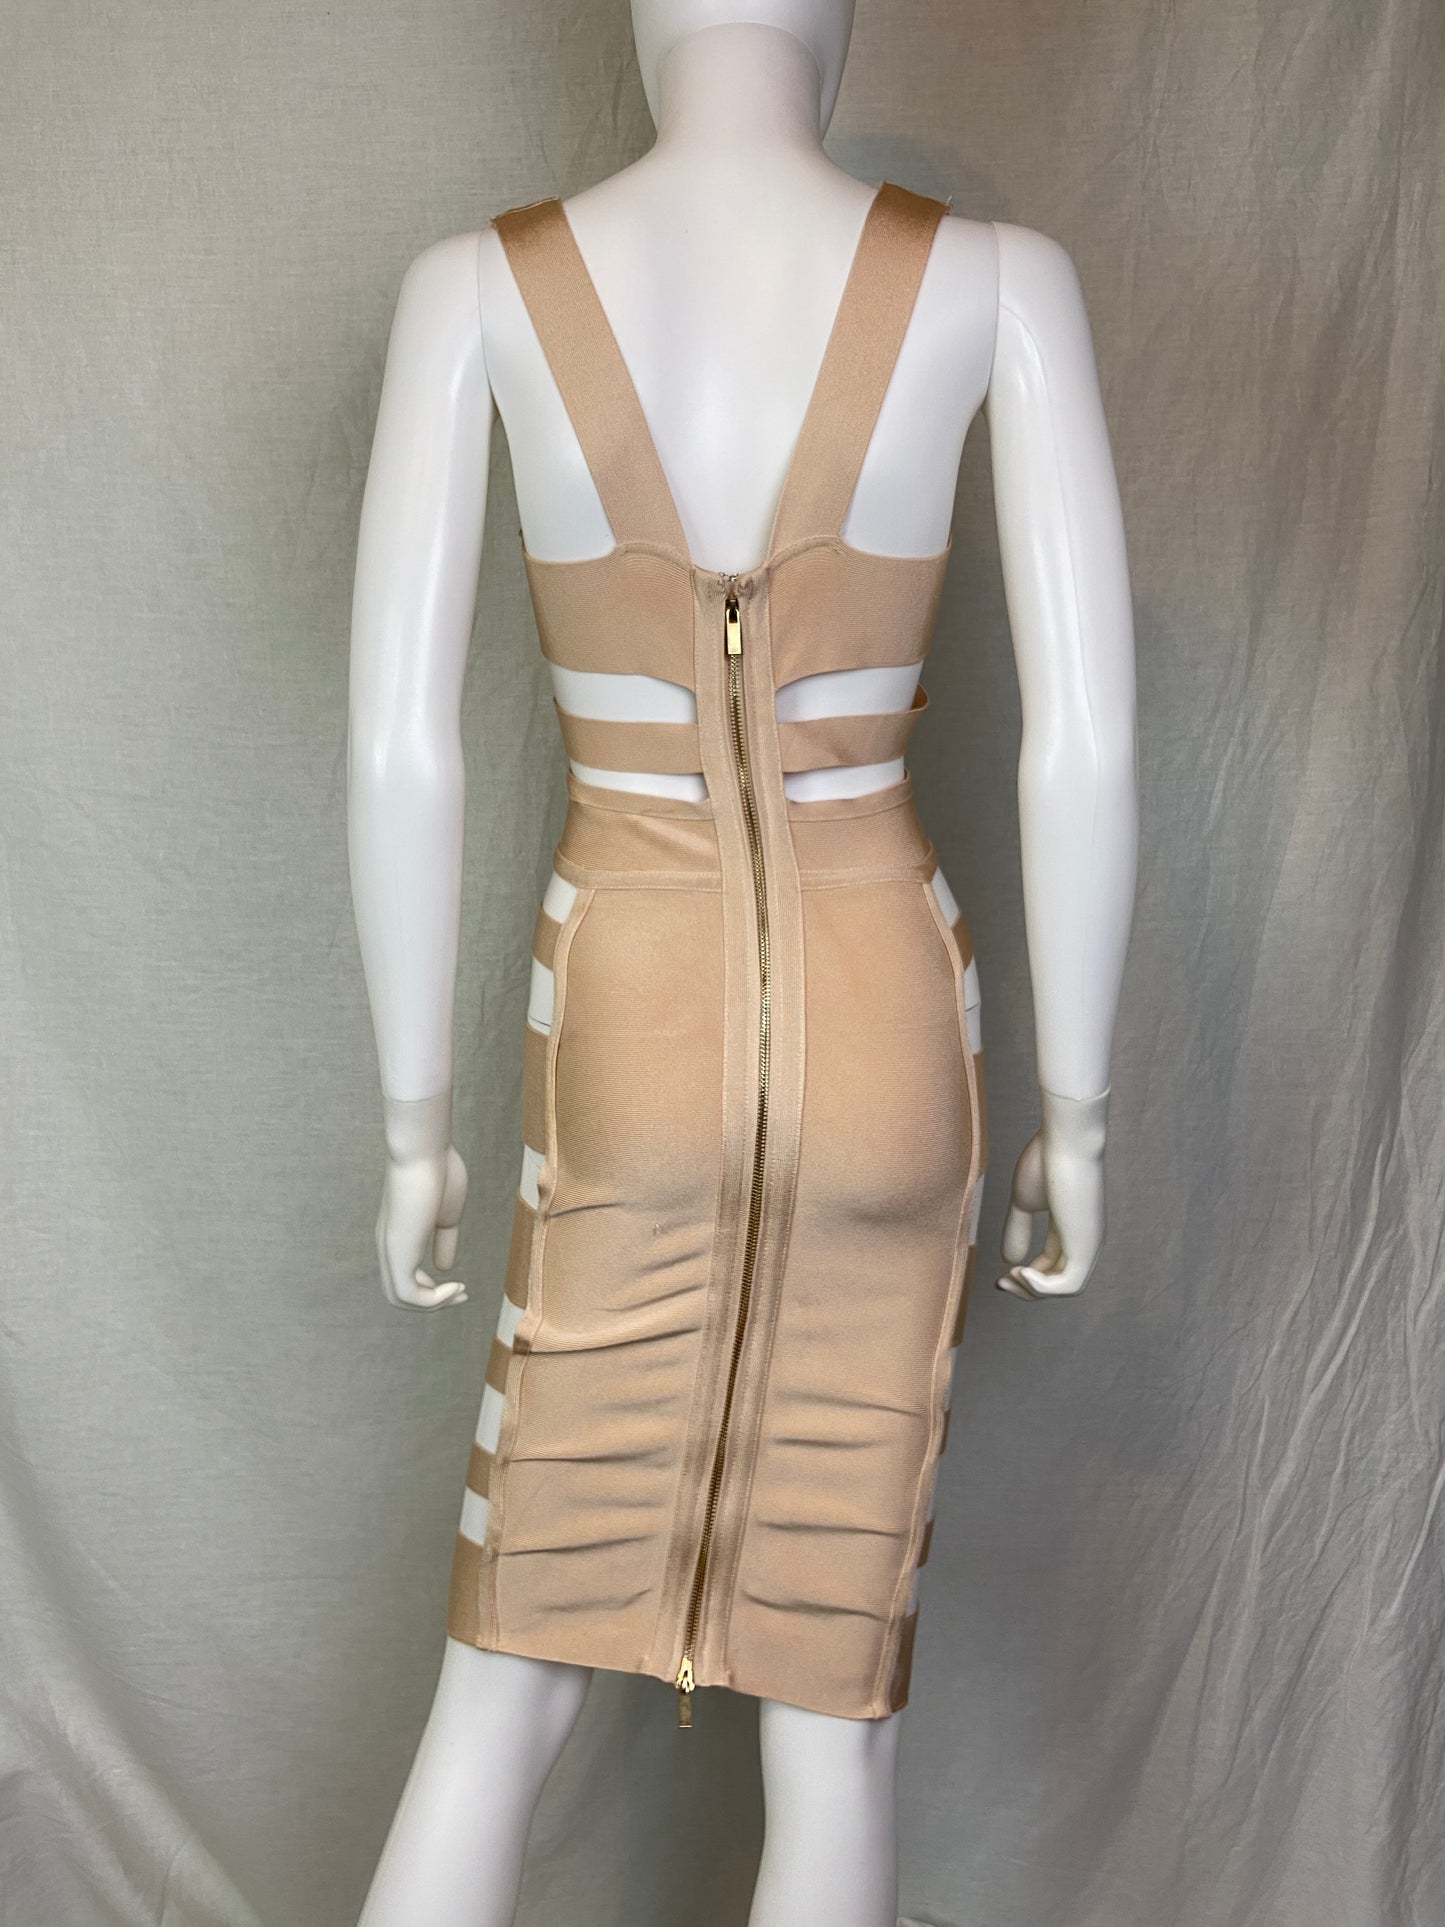 Herve Leger style Beige Plunge Cut Out Bandage Mini Dress